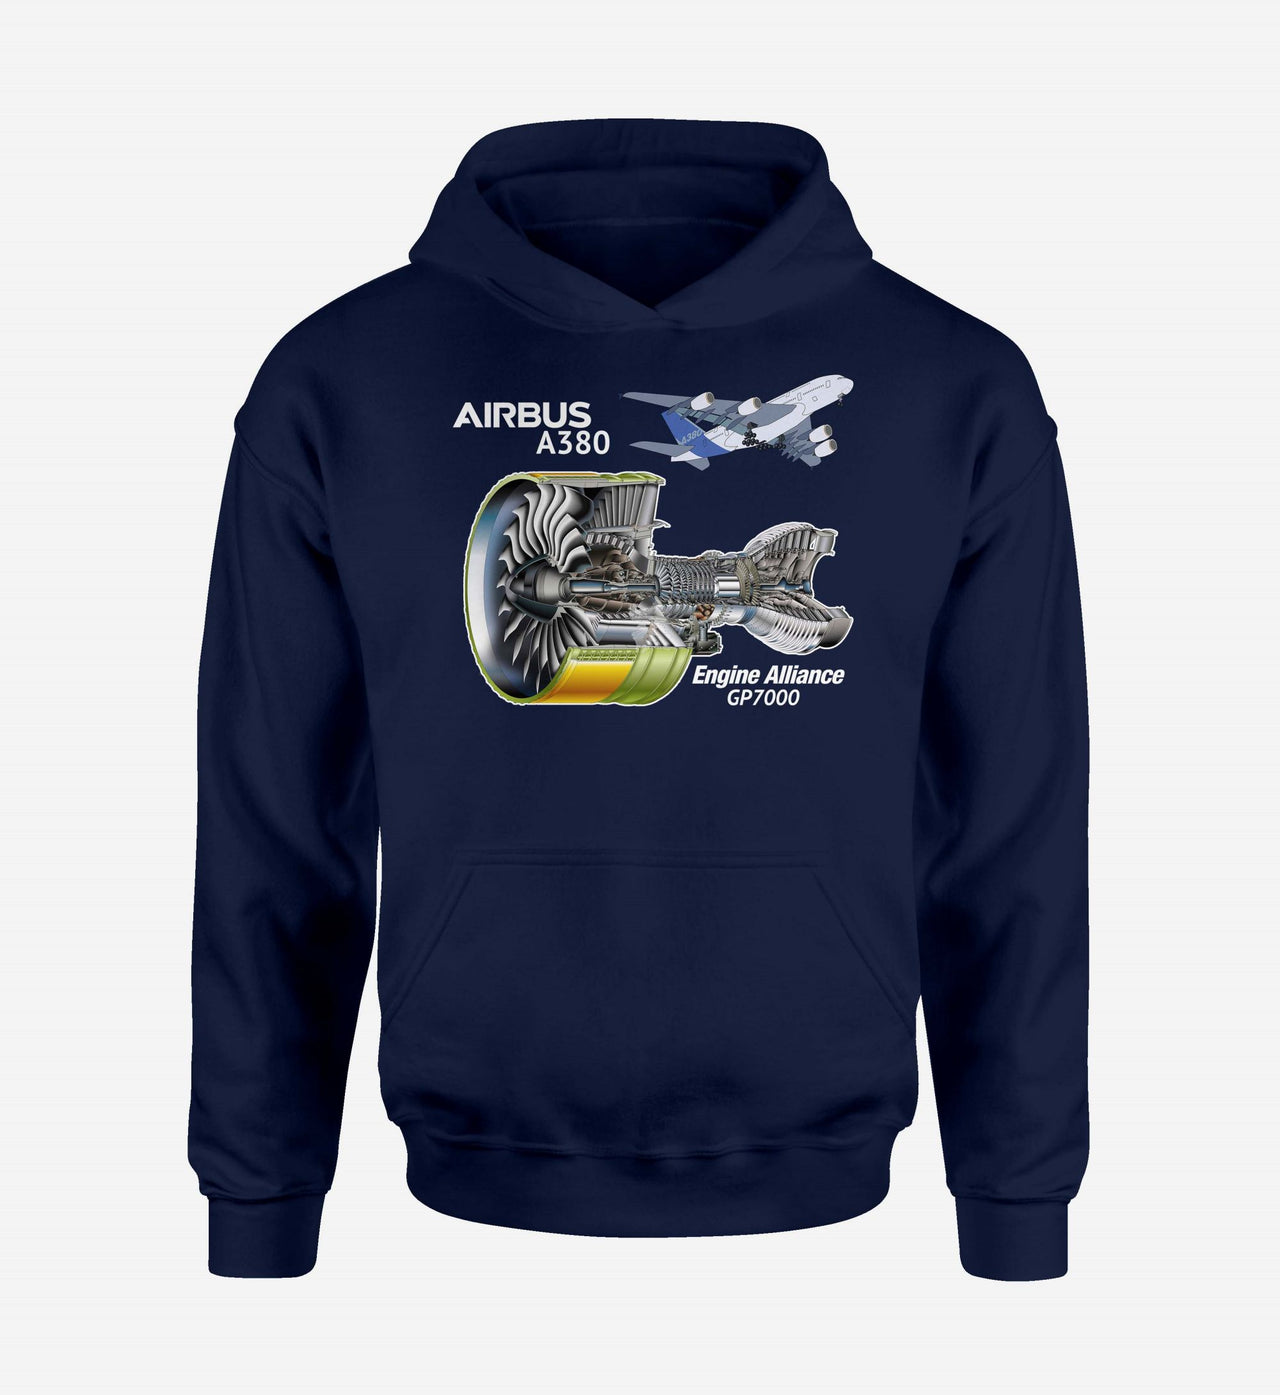 Airbus A380 & GP7000 Engine Designed Hoodies